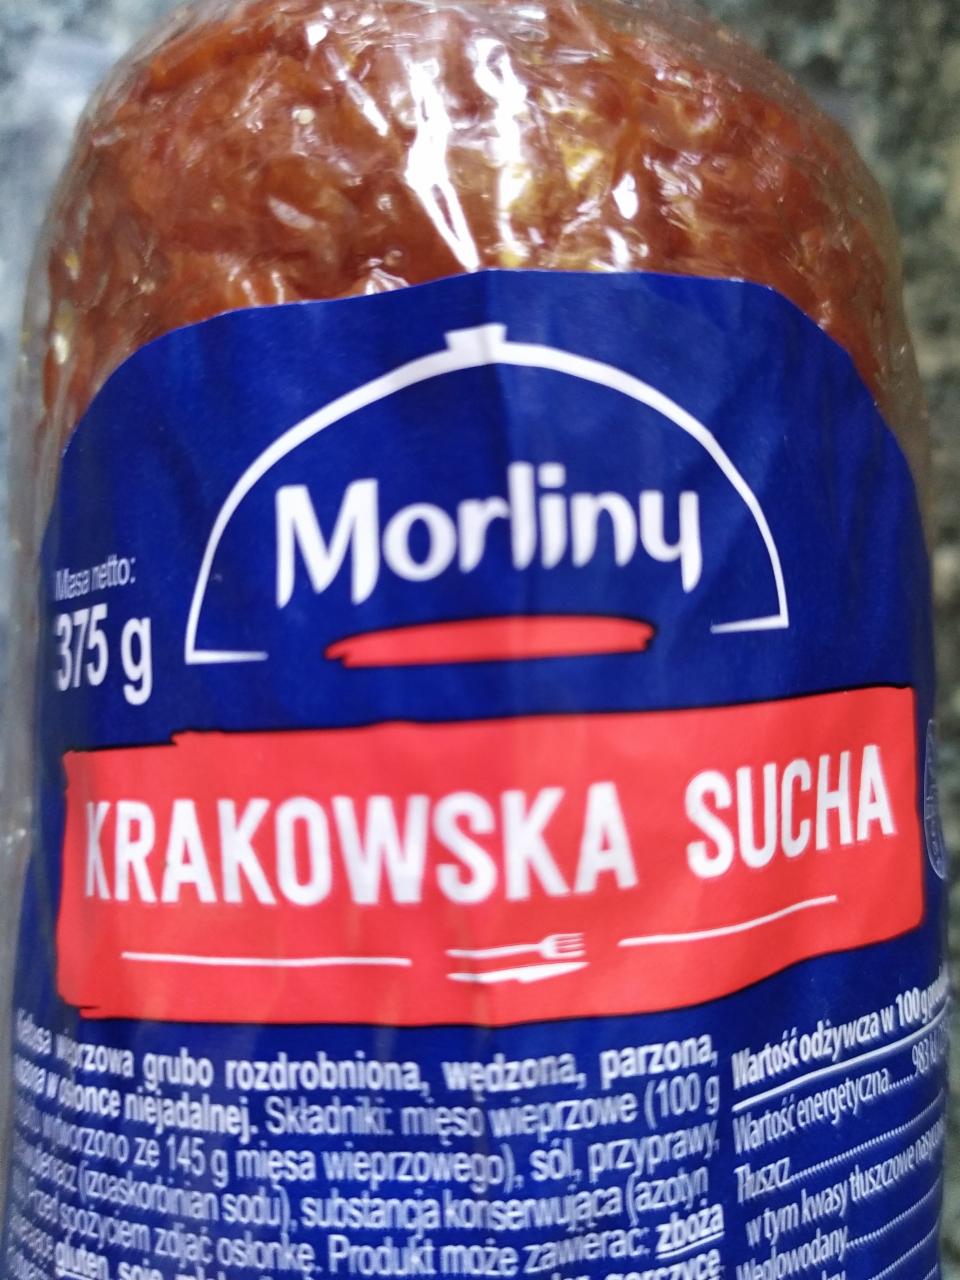 Zdjęcia - Krakowska sucha Morliny